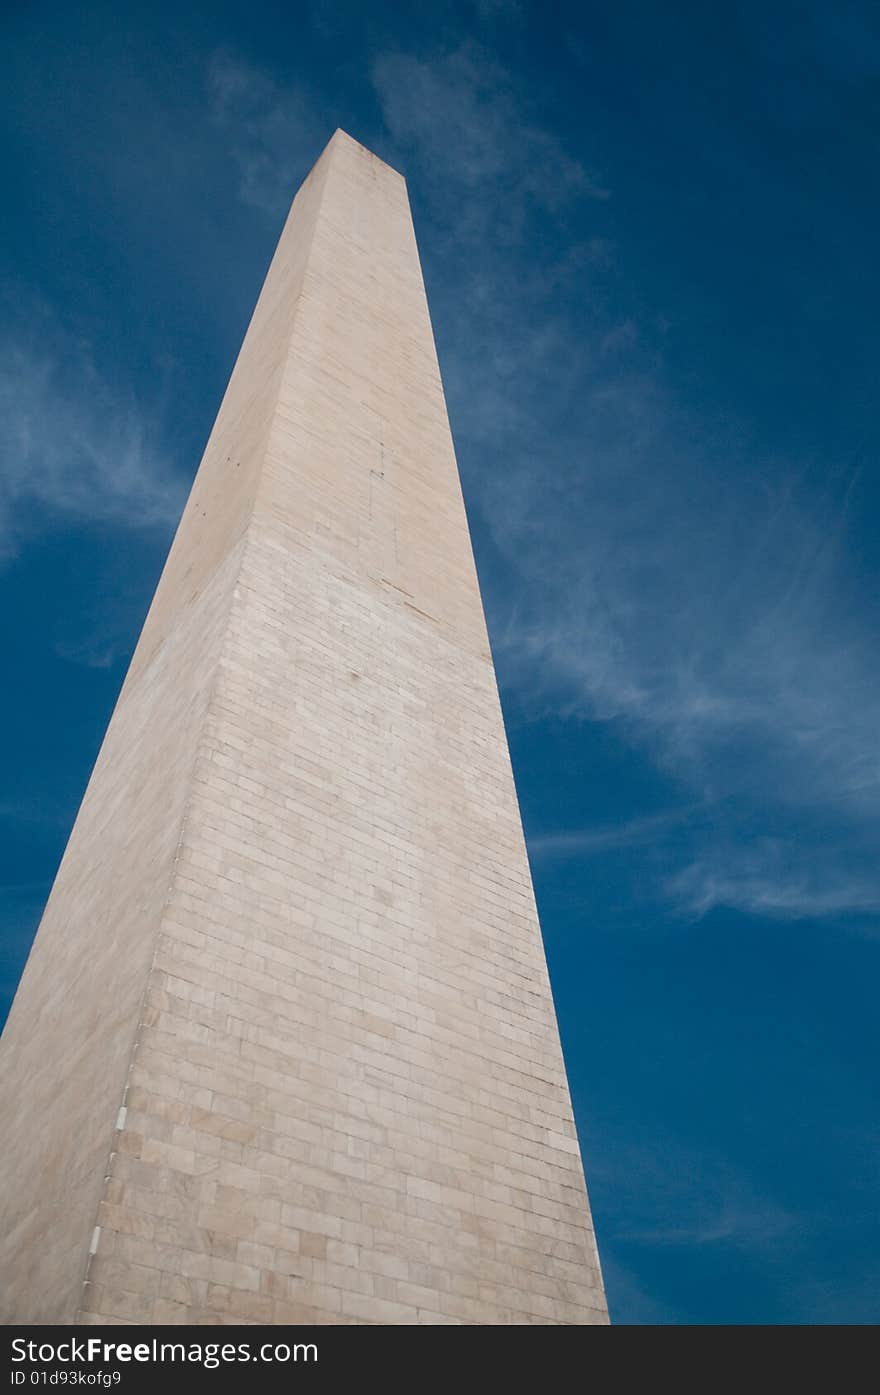 The Washington Monument in Washington DC USA